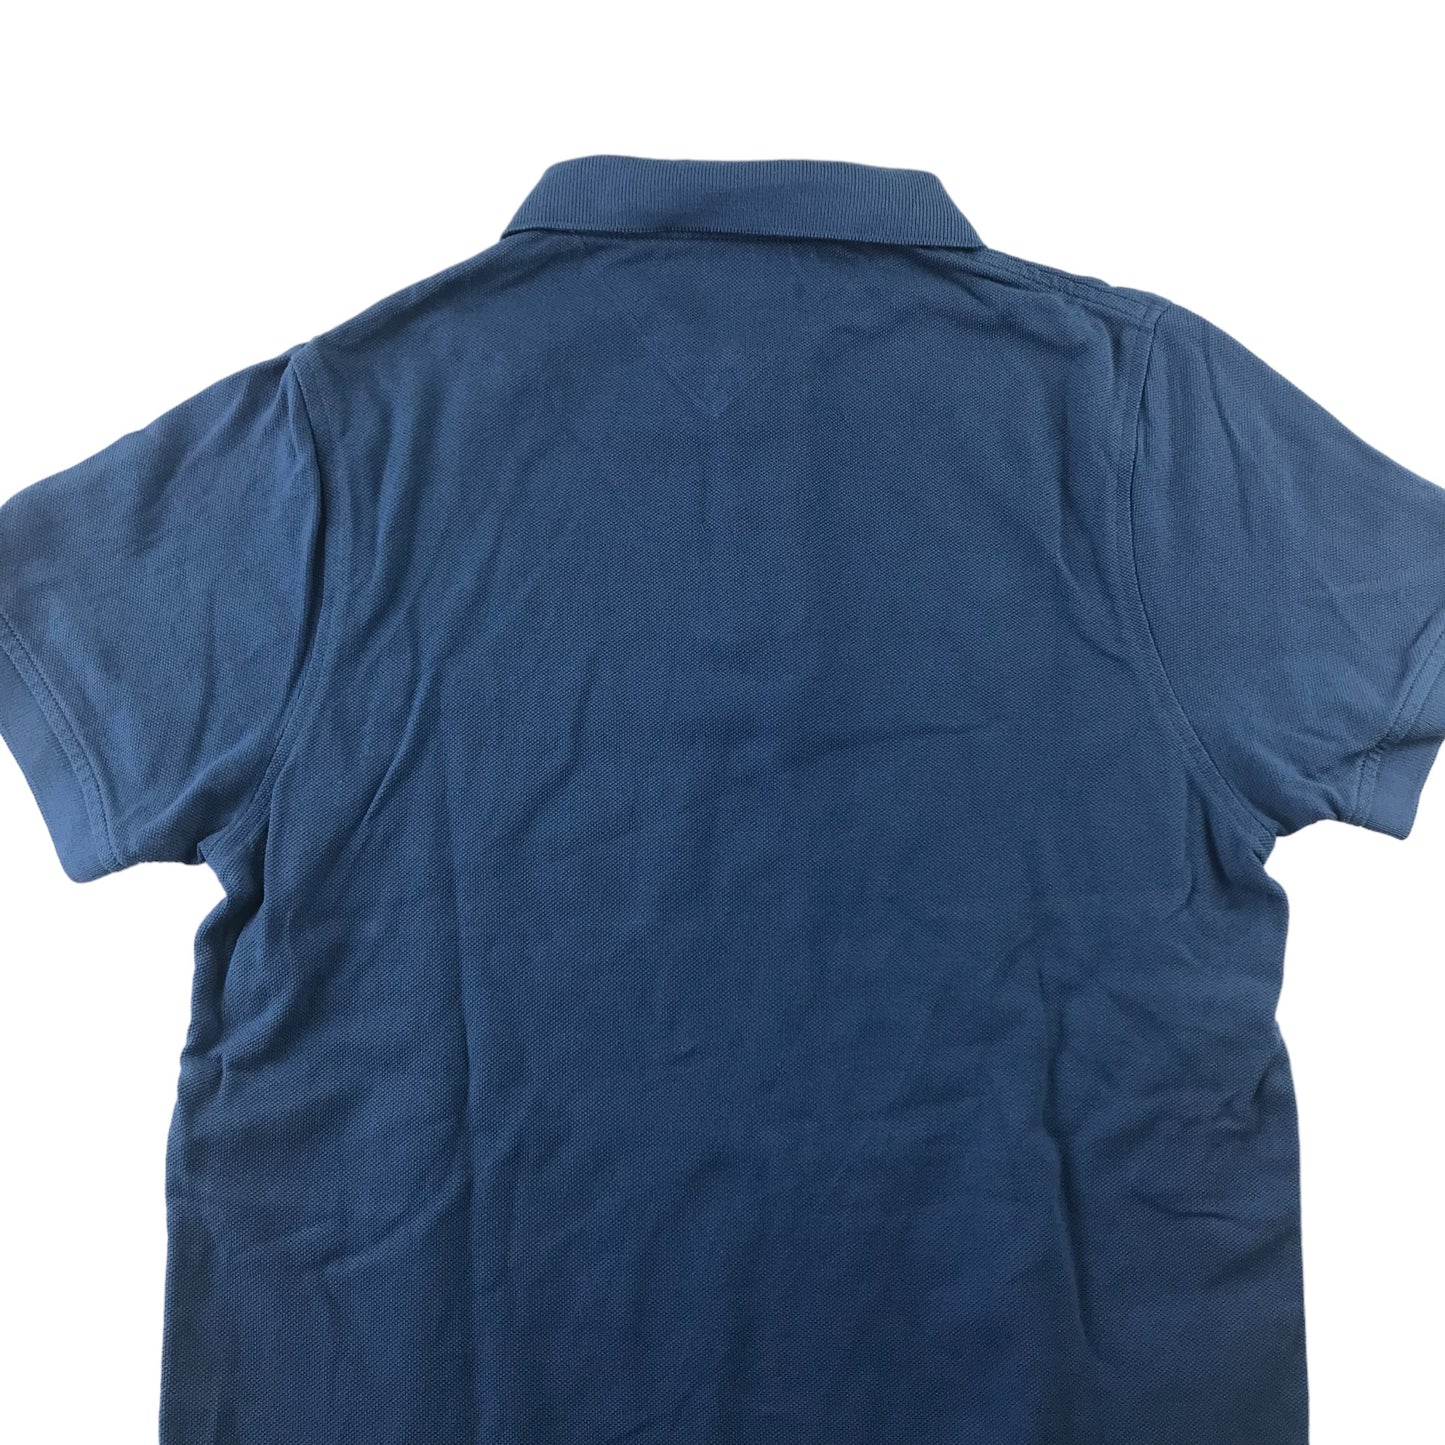 Tommy Hilfiger Polo Shirt Size Small Blue Short Sleeve Plain Slim Fit Cotton